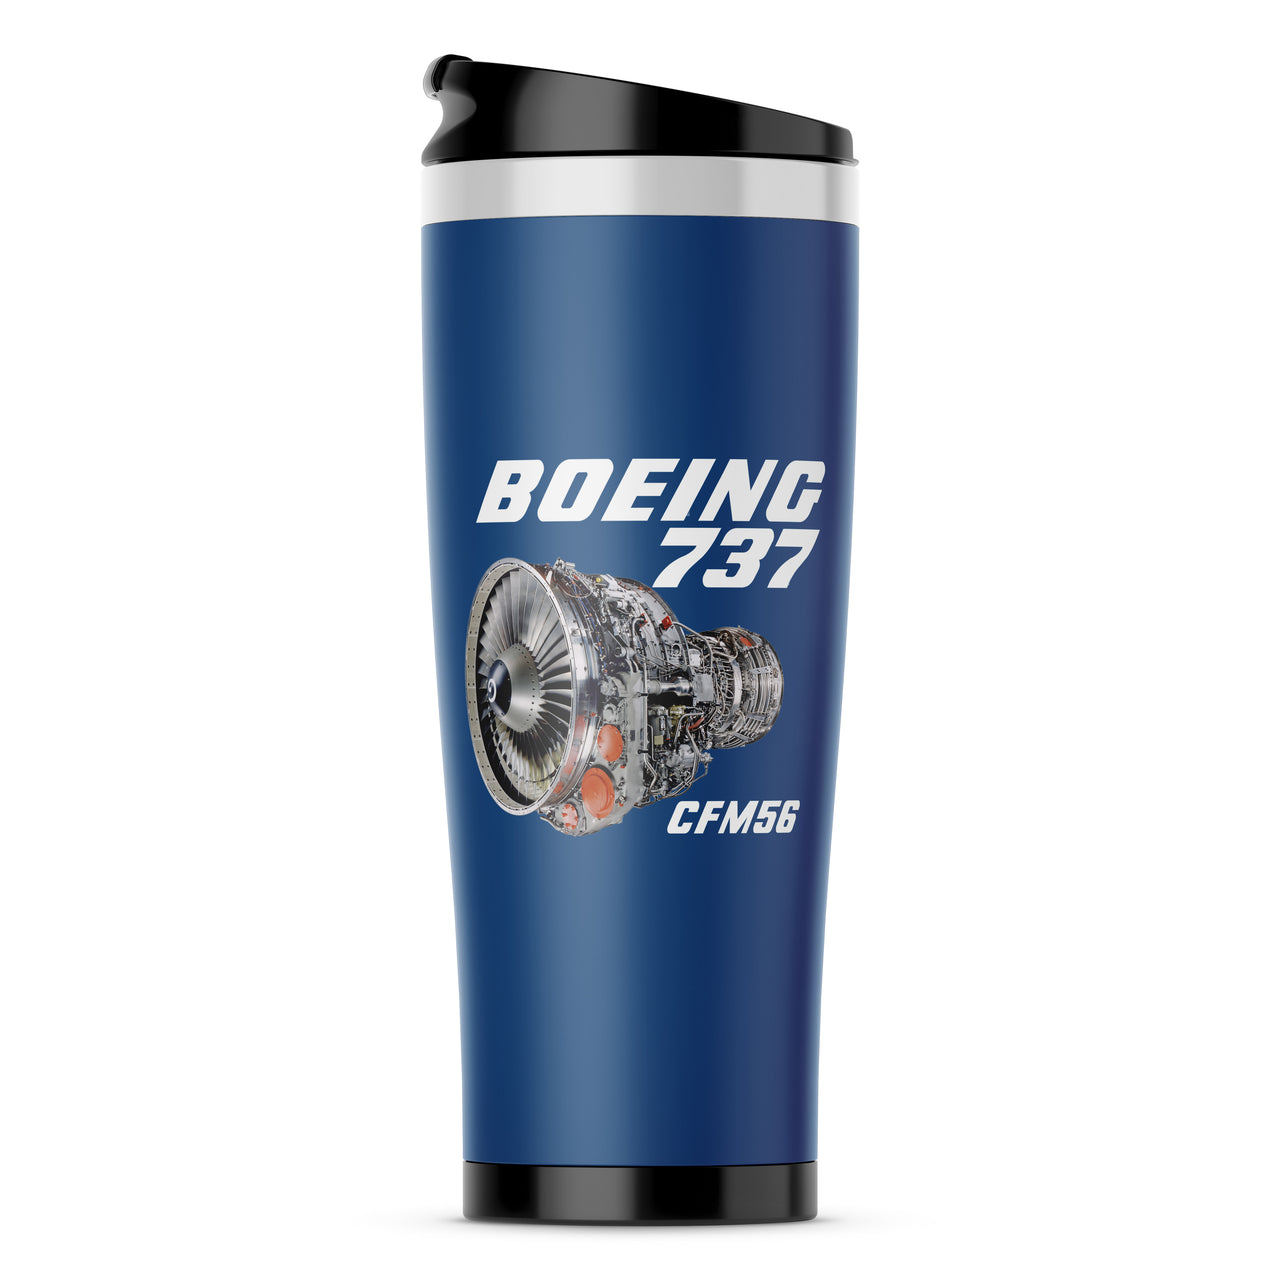 Boeing 737 Engine & CFM56 Designed Travel Mugs